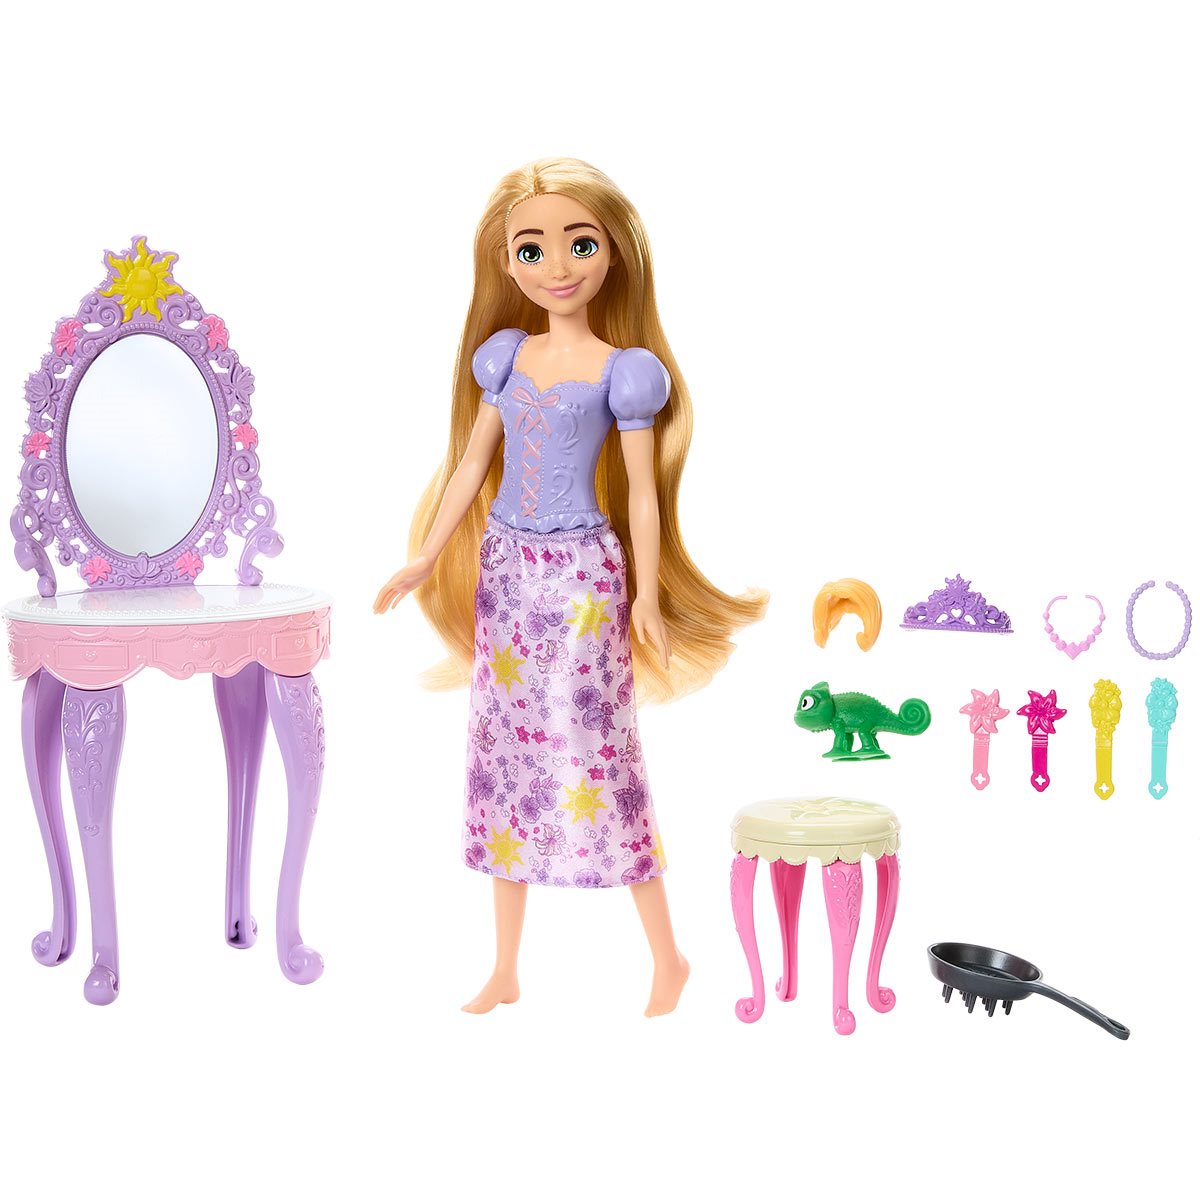 Disney Princess Rapunzel's Vanity - Entertainment Earth